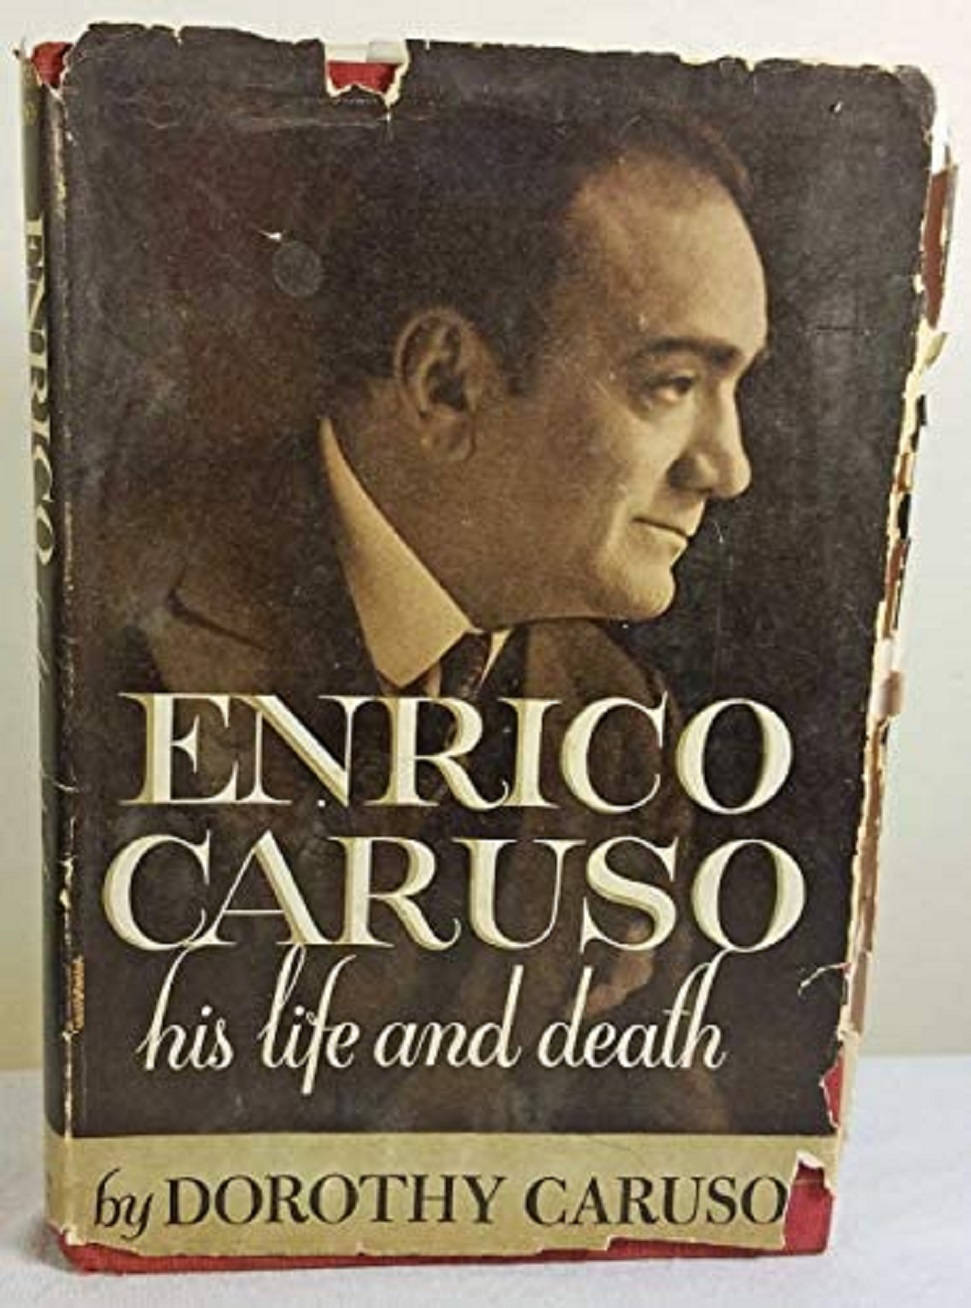 Italian Opera Singer Enrico Caruso Biography Book Cover Background